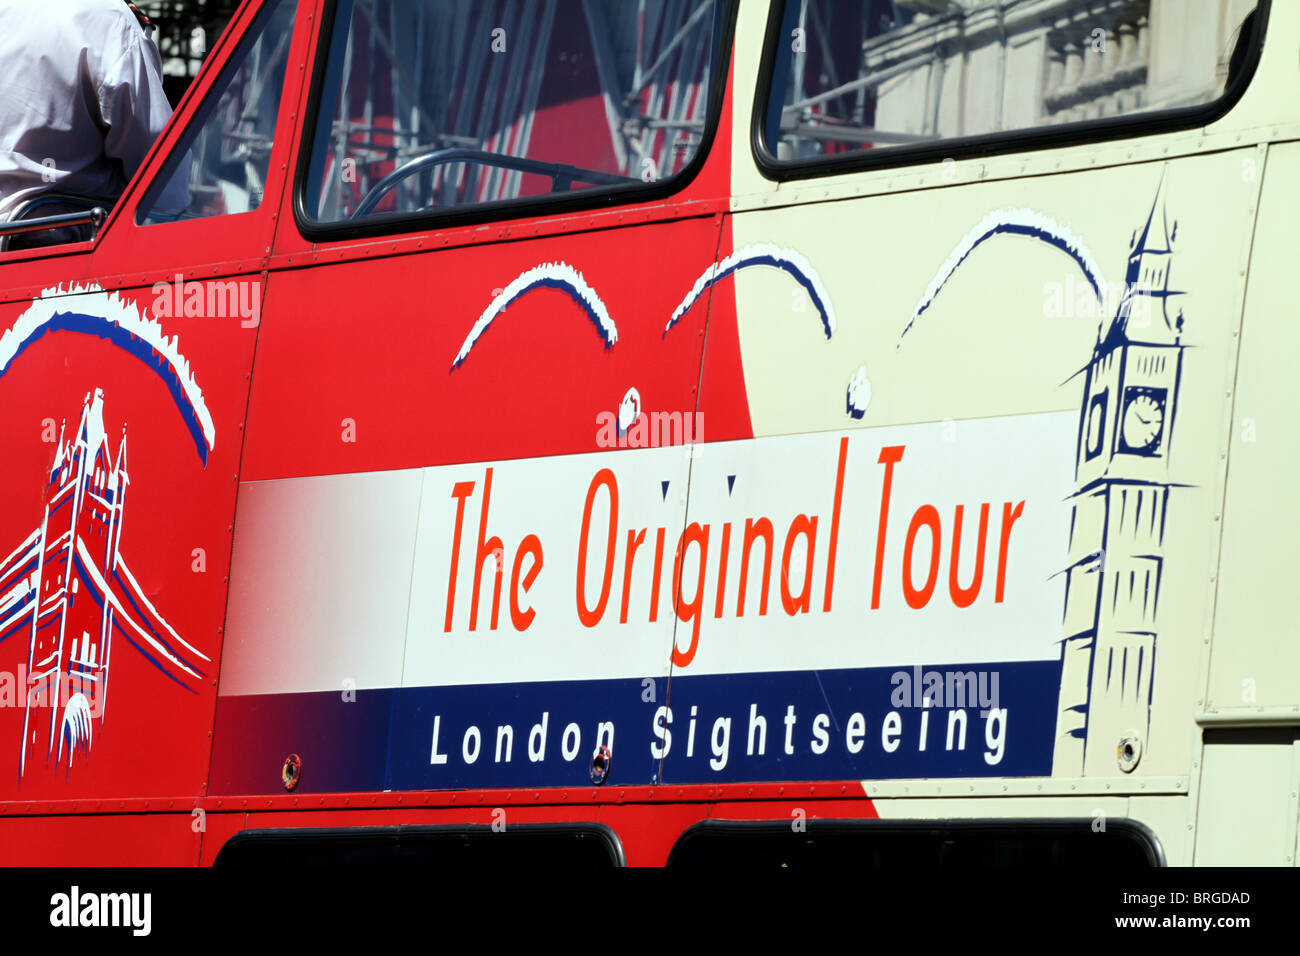 London Sightseeing, the Original Tour sign on tourist bus, London tourism, England Stock Photo